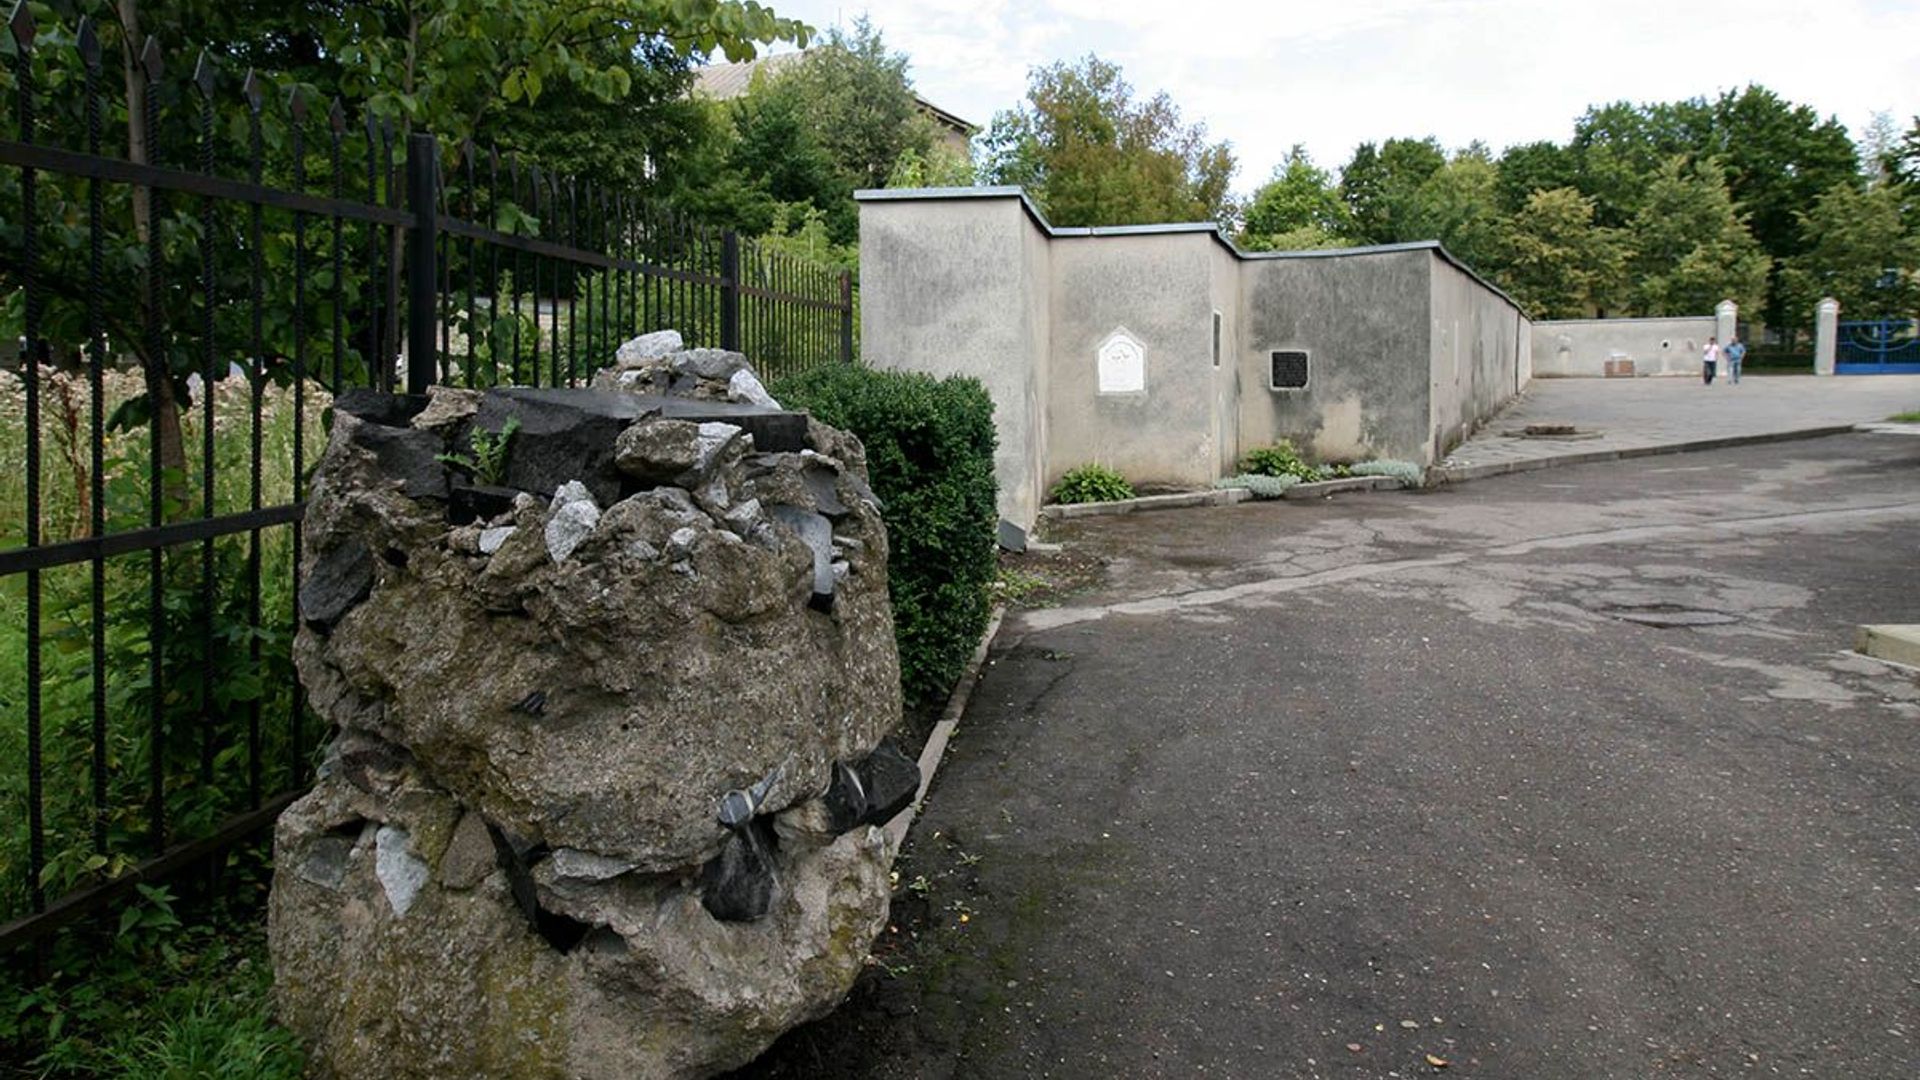 Klaipeda Synagogue site and Jewish cemetery